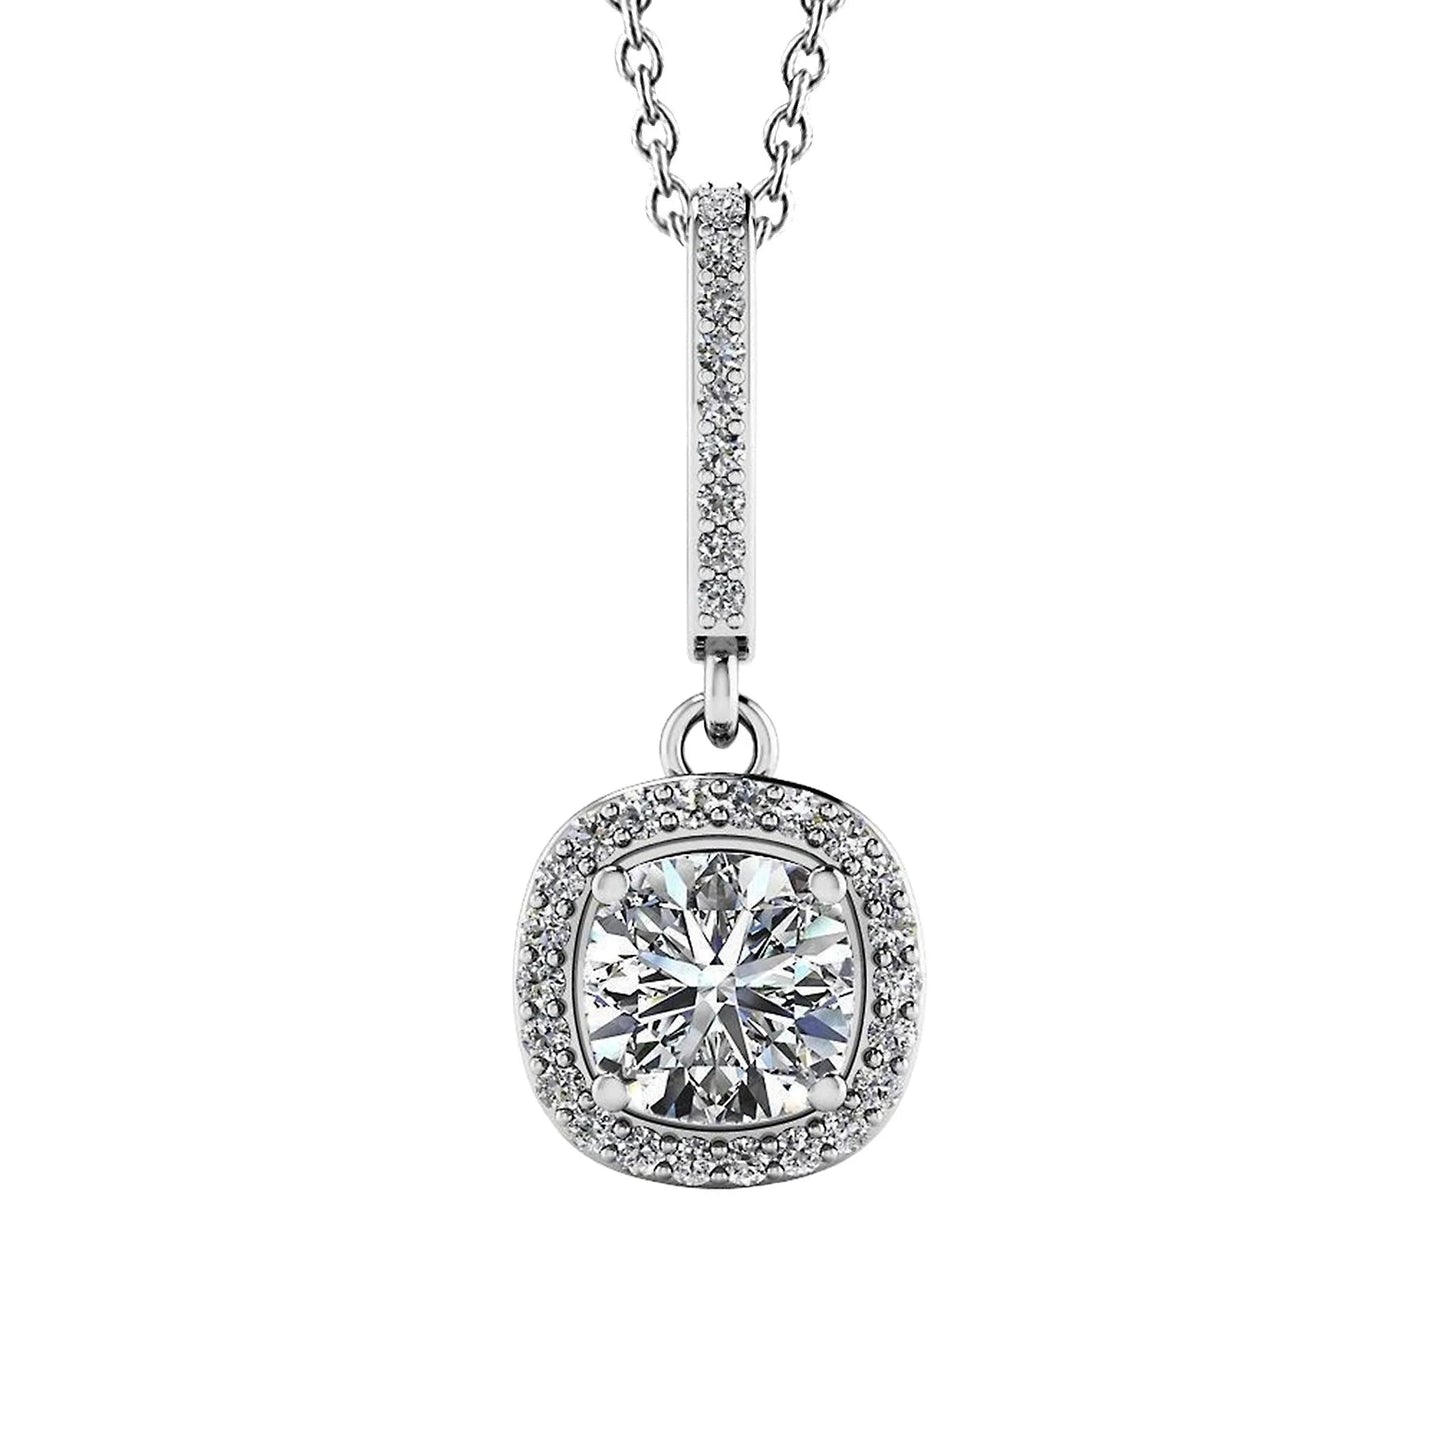 Real Cushion Cut Diamond Ravishing Drop Pendant Necklace 4.31 Carat WG 14K